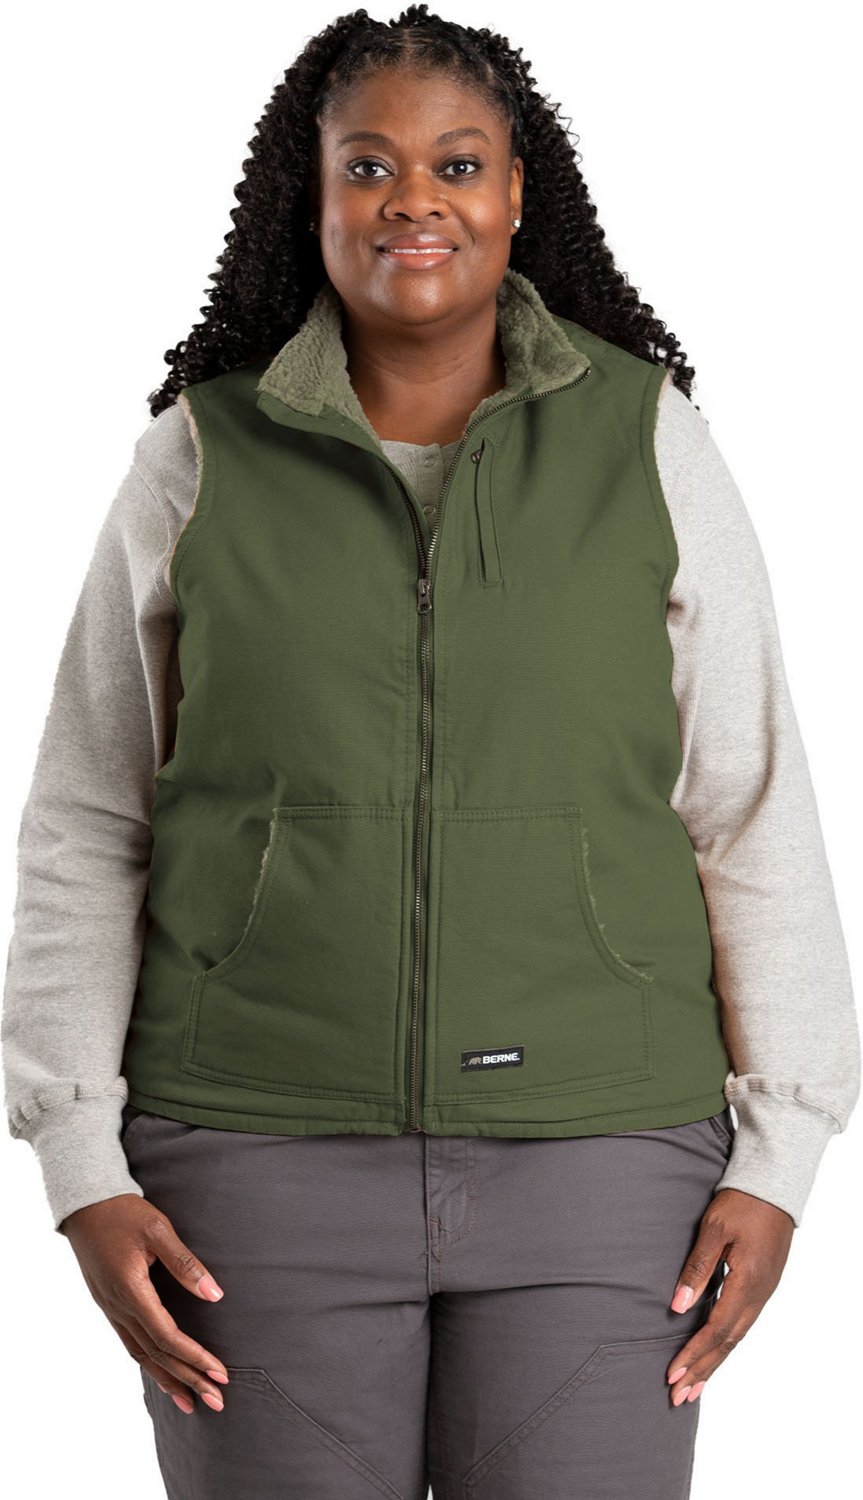 Berne Women's Sherpa-Lined Softstone Duck Vest | Academy